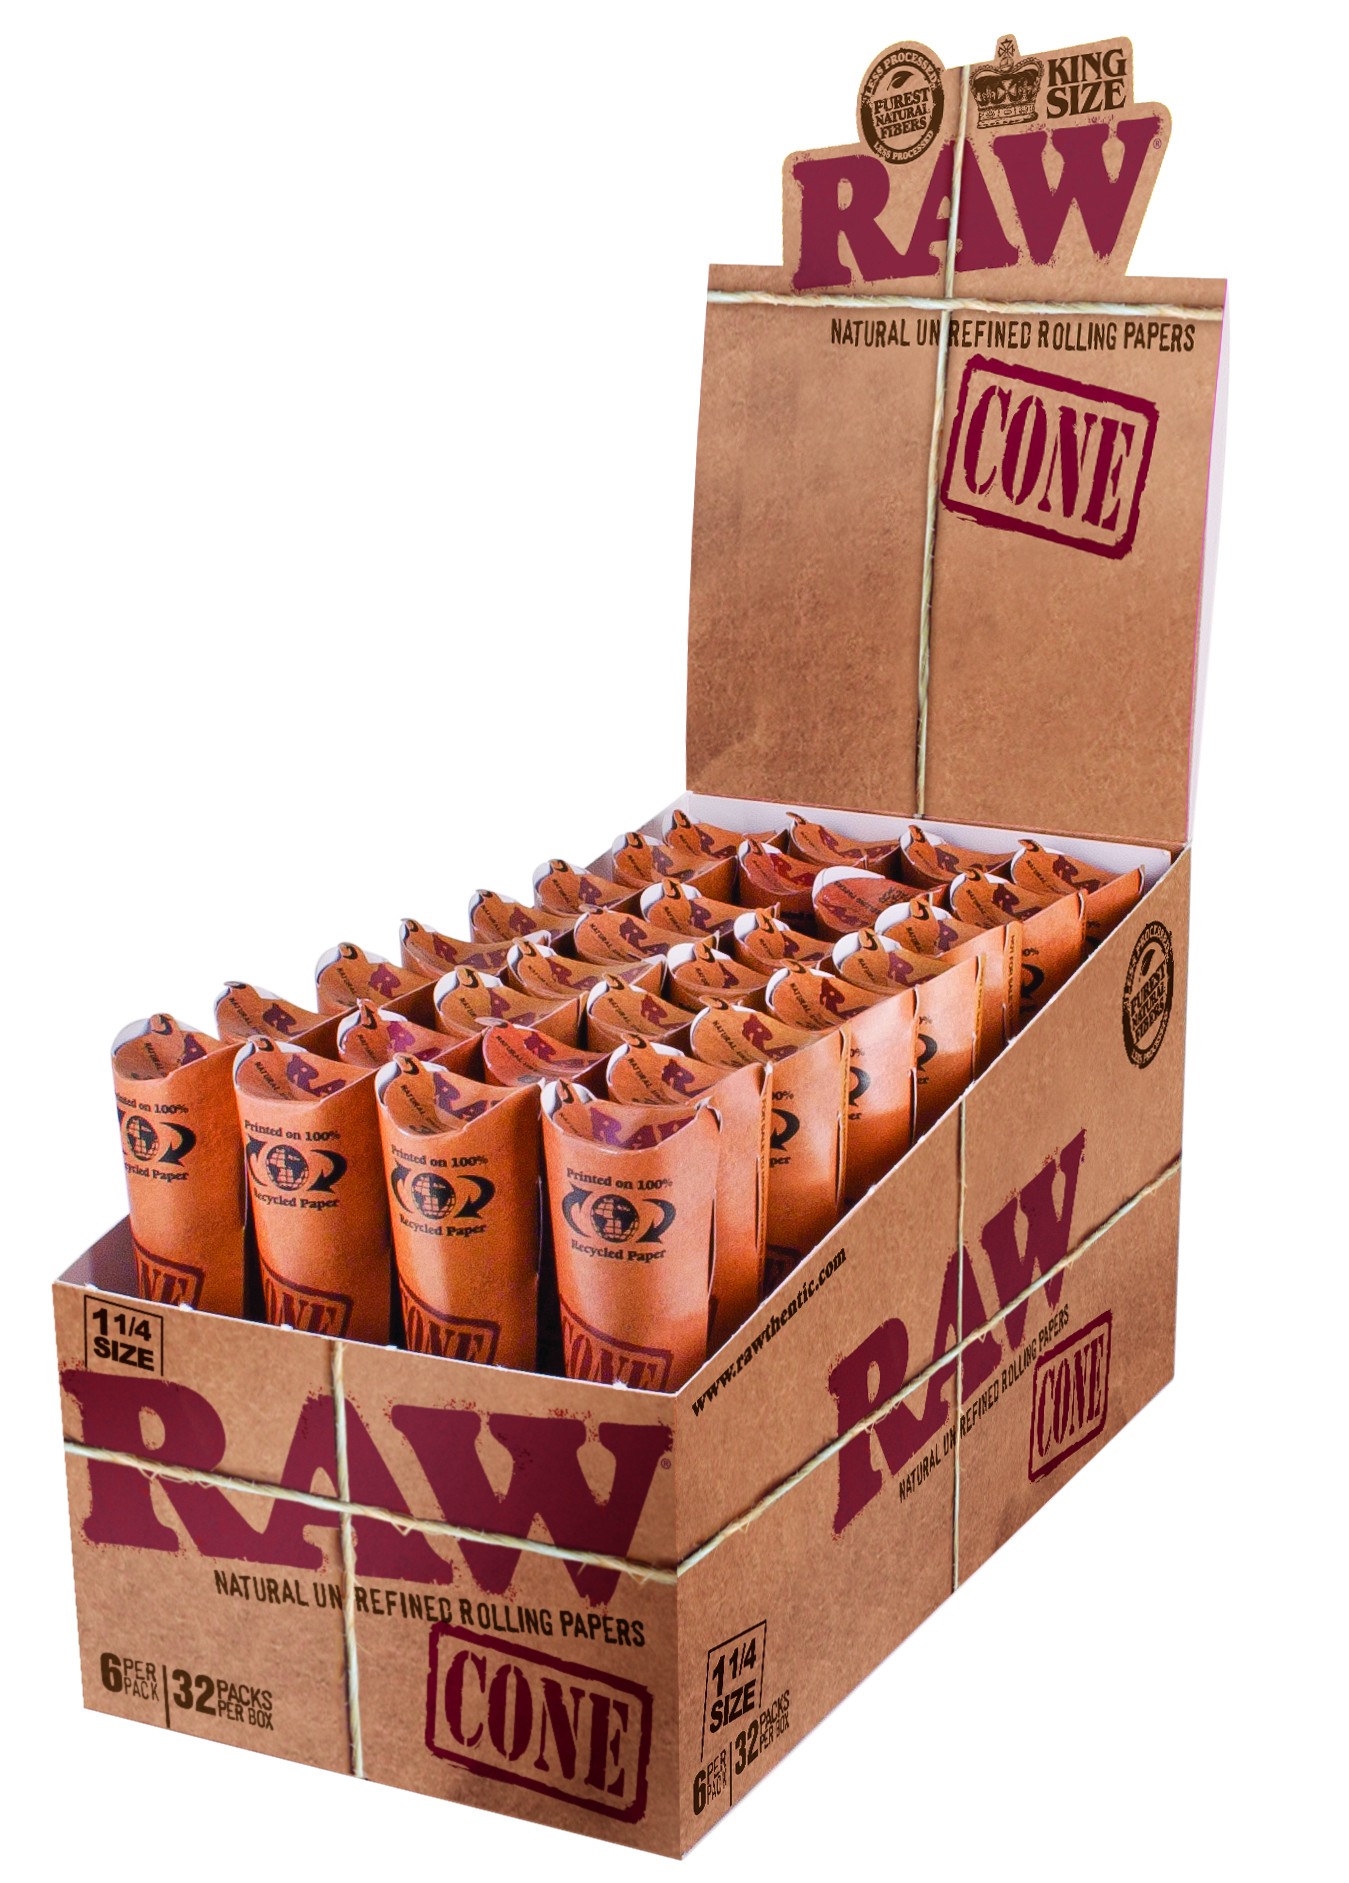 RAW - CONES (6 x 1.25 SIZE)